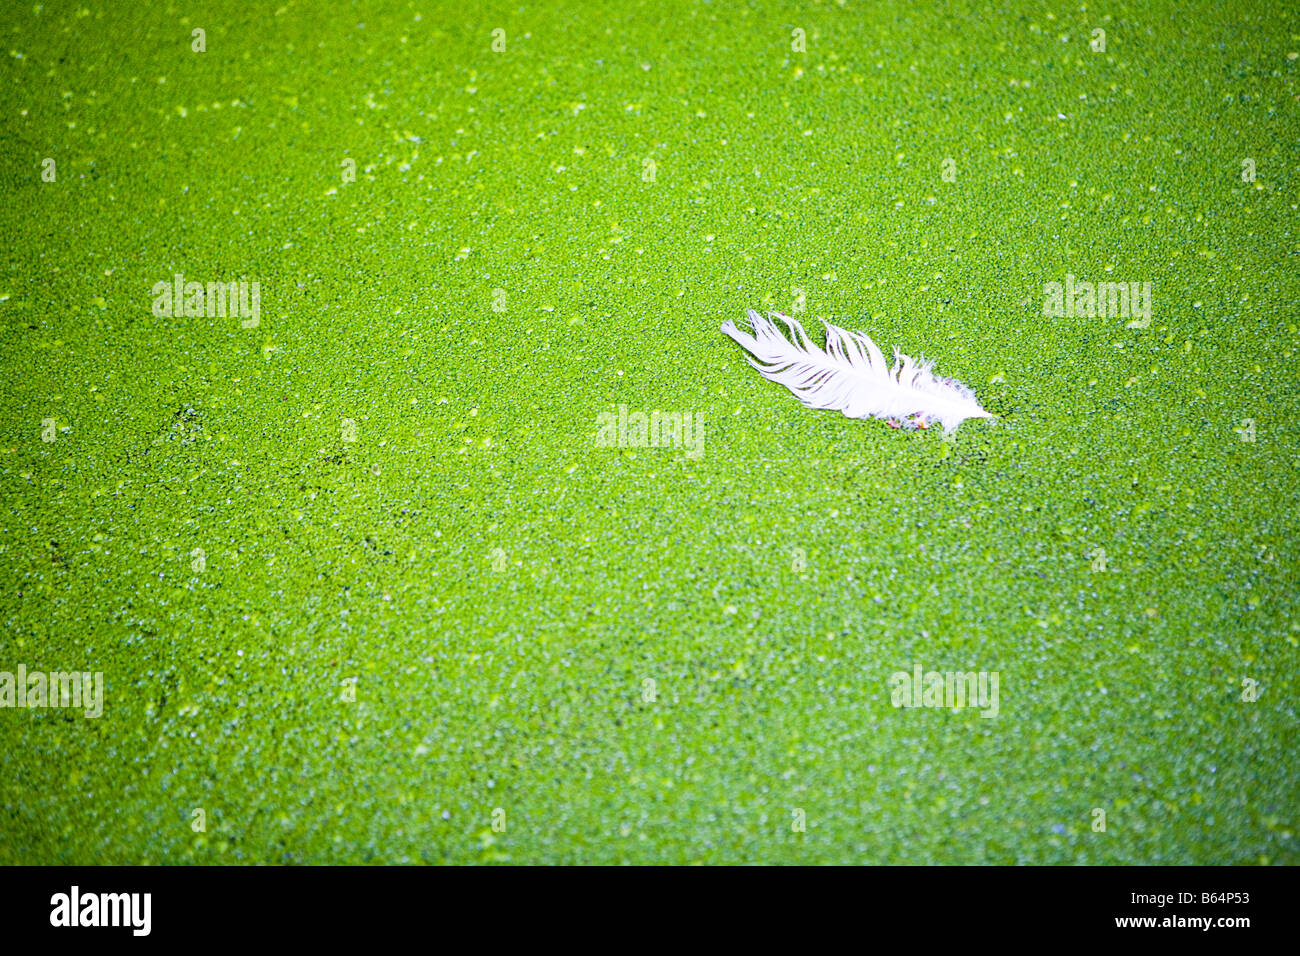 White feather floating among duckweed Stock Photo